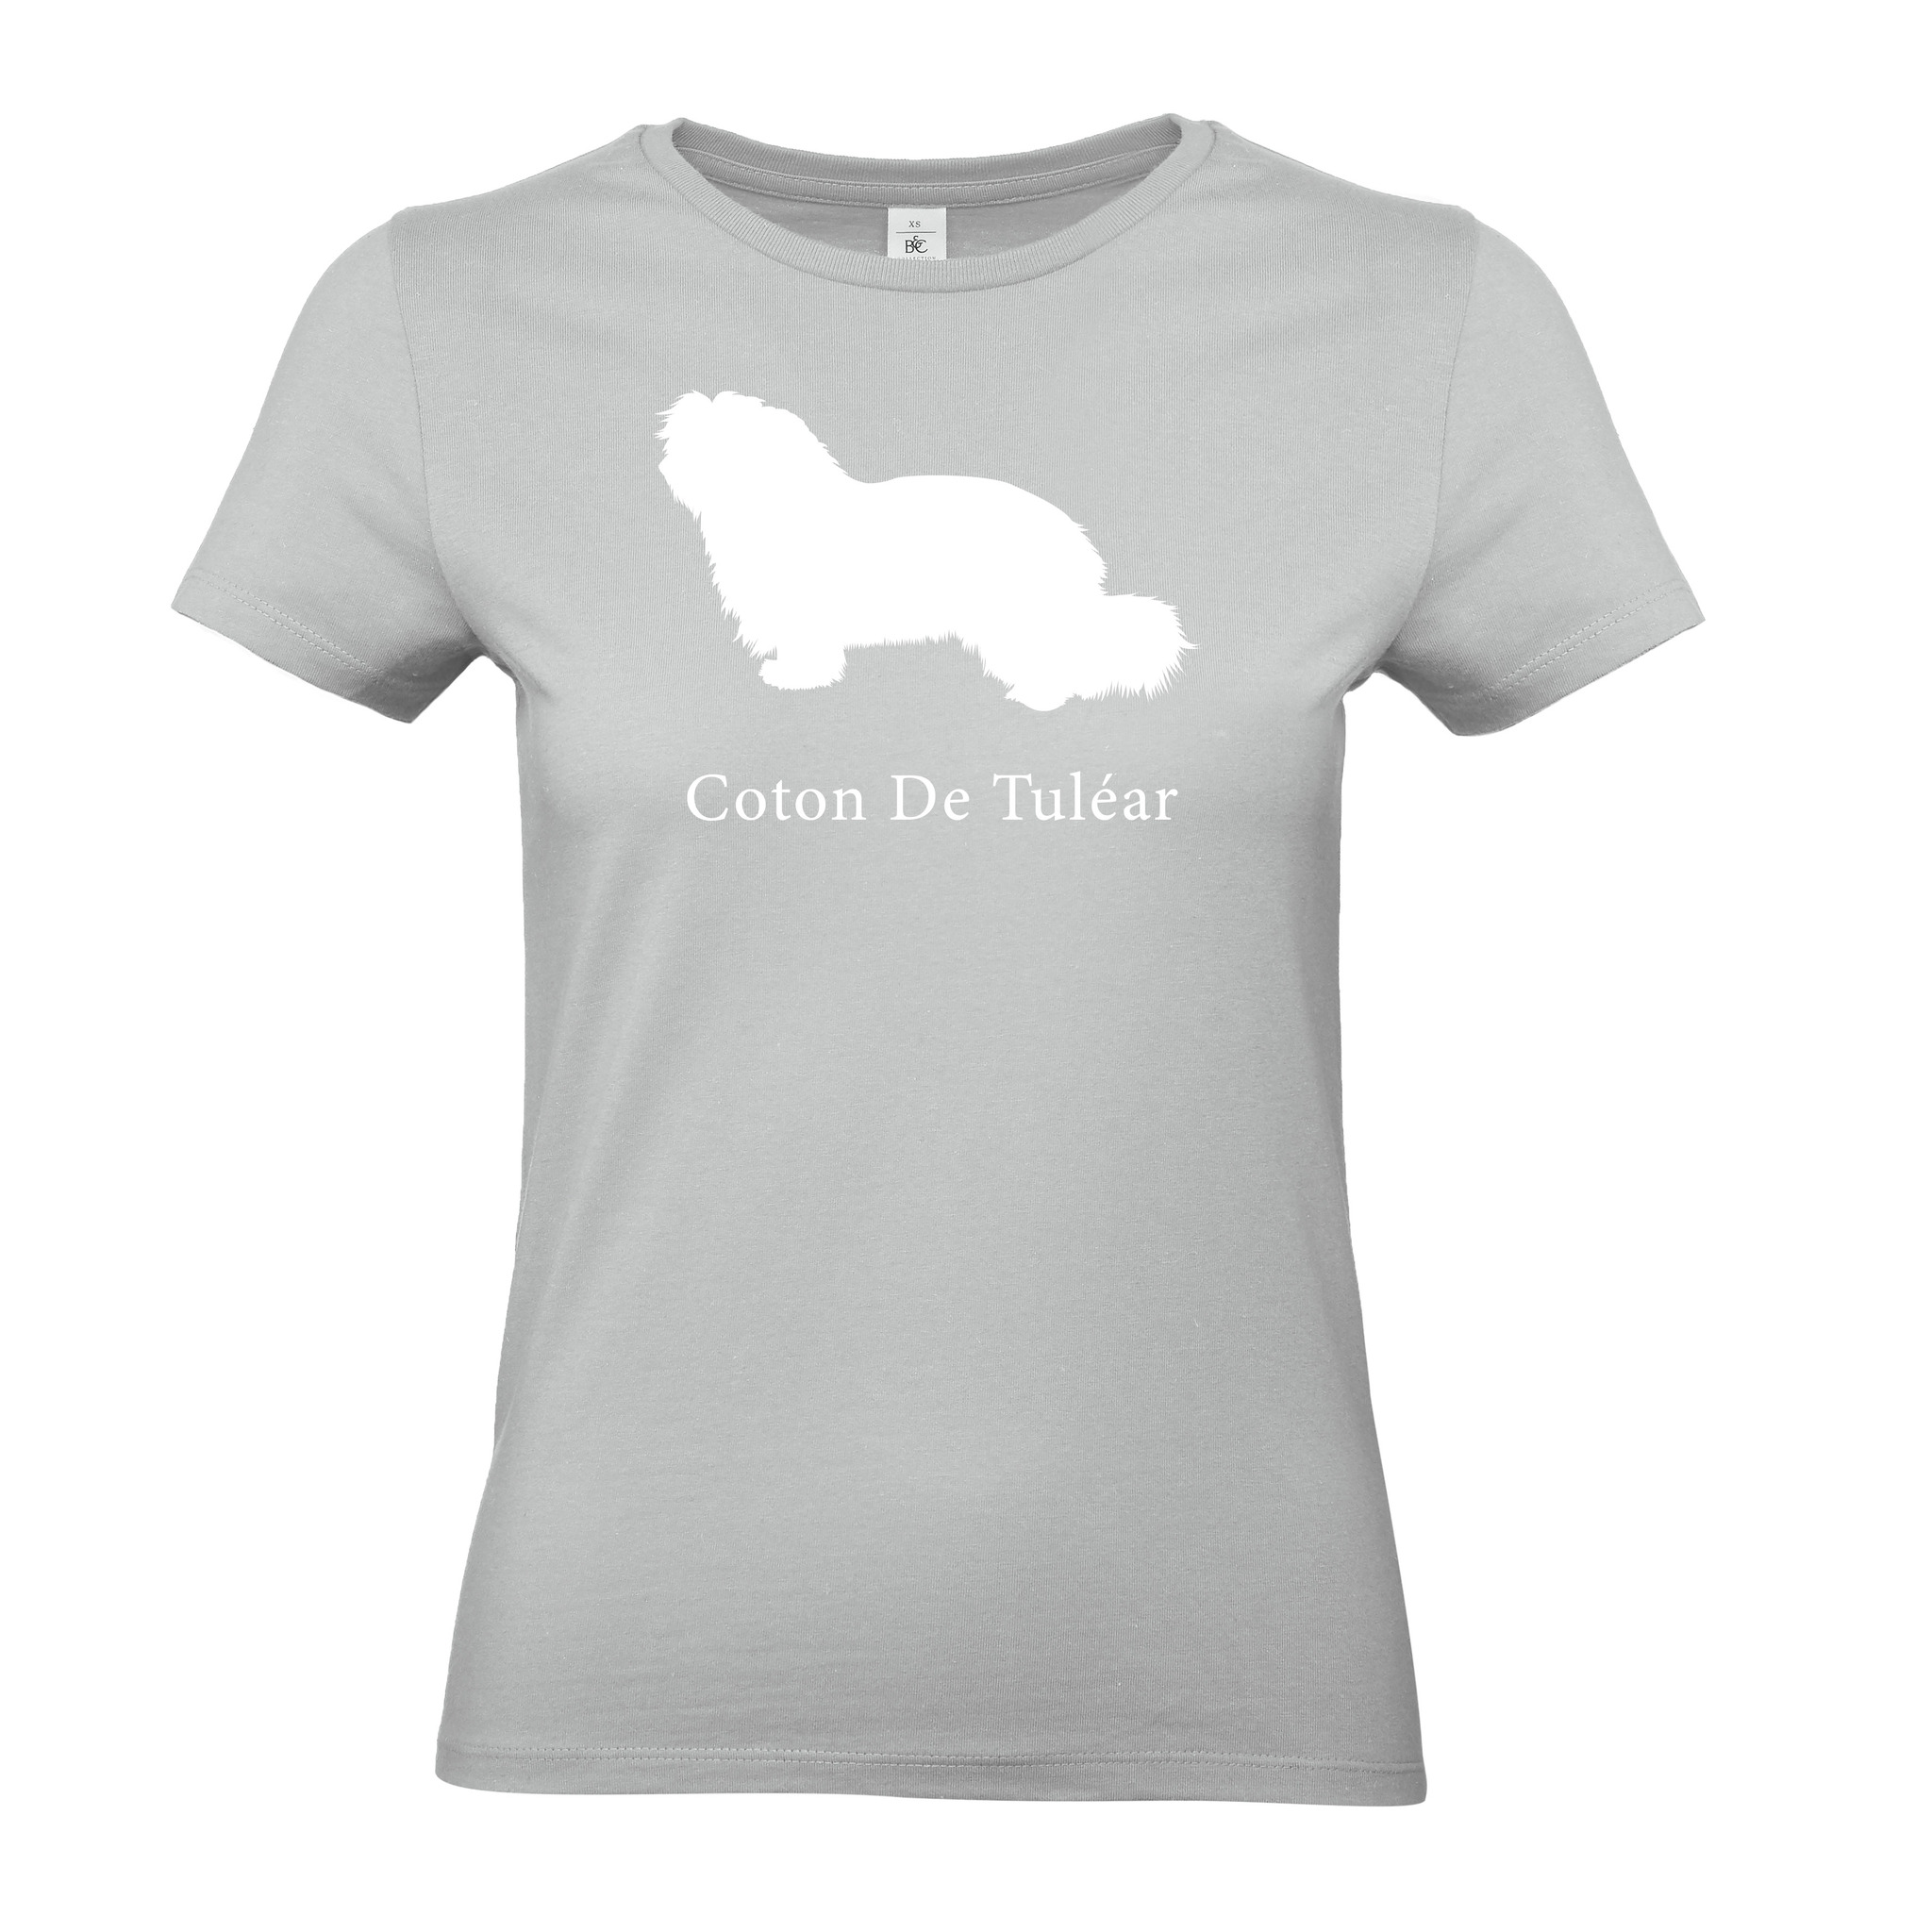 T-shirt Dam, Hundraser - Pacific Grey